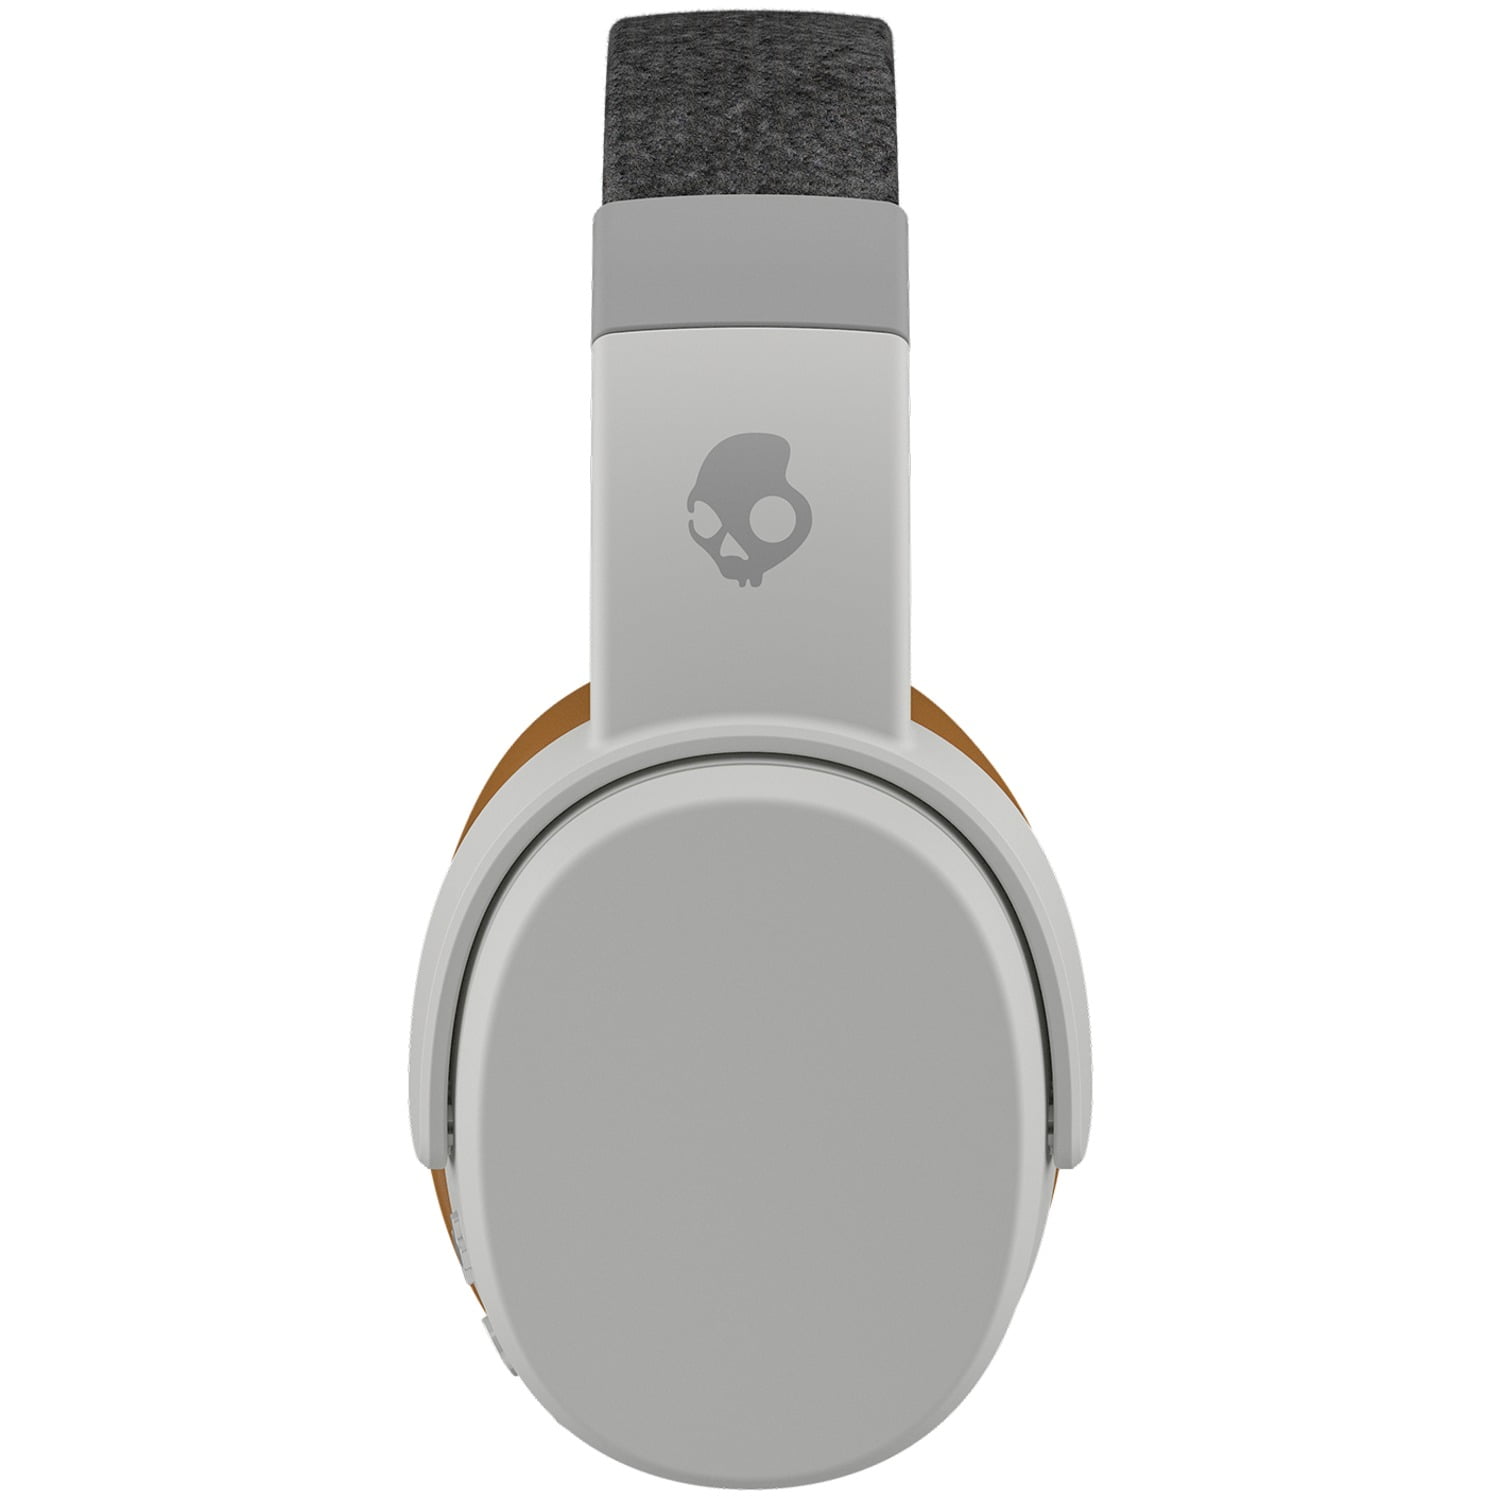 Skullcandy Crusher Bluetooth Over-Ear Headphones, Gray & Tan 